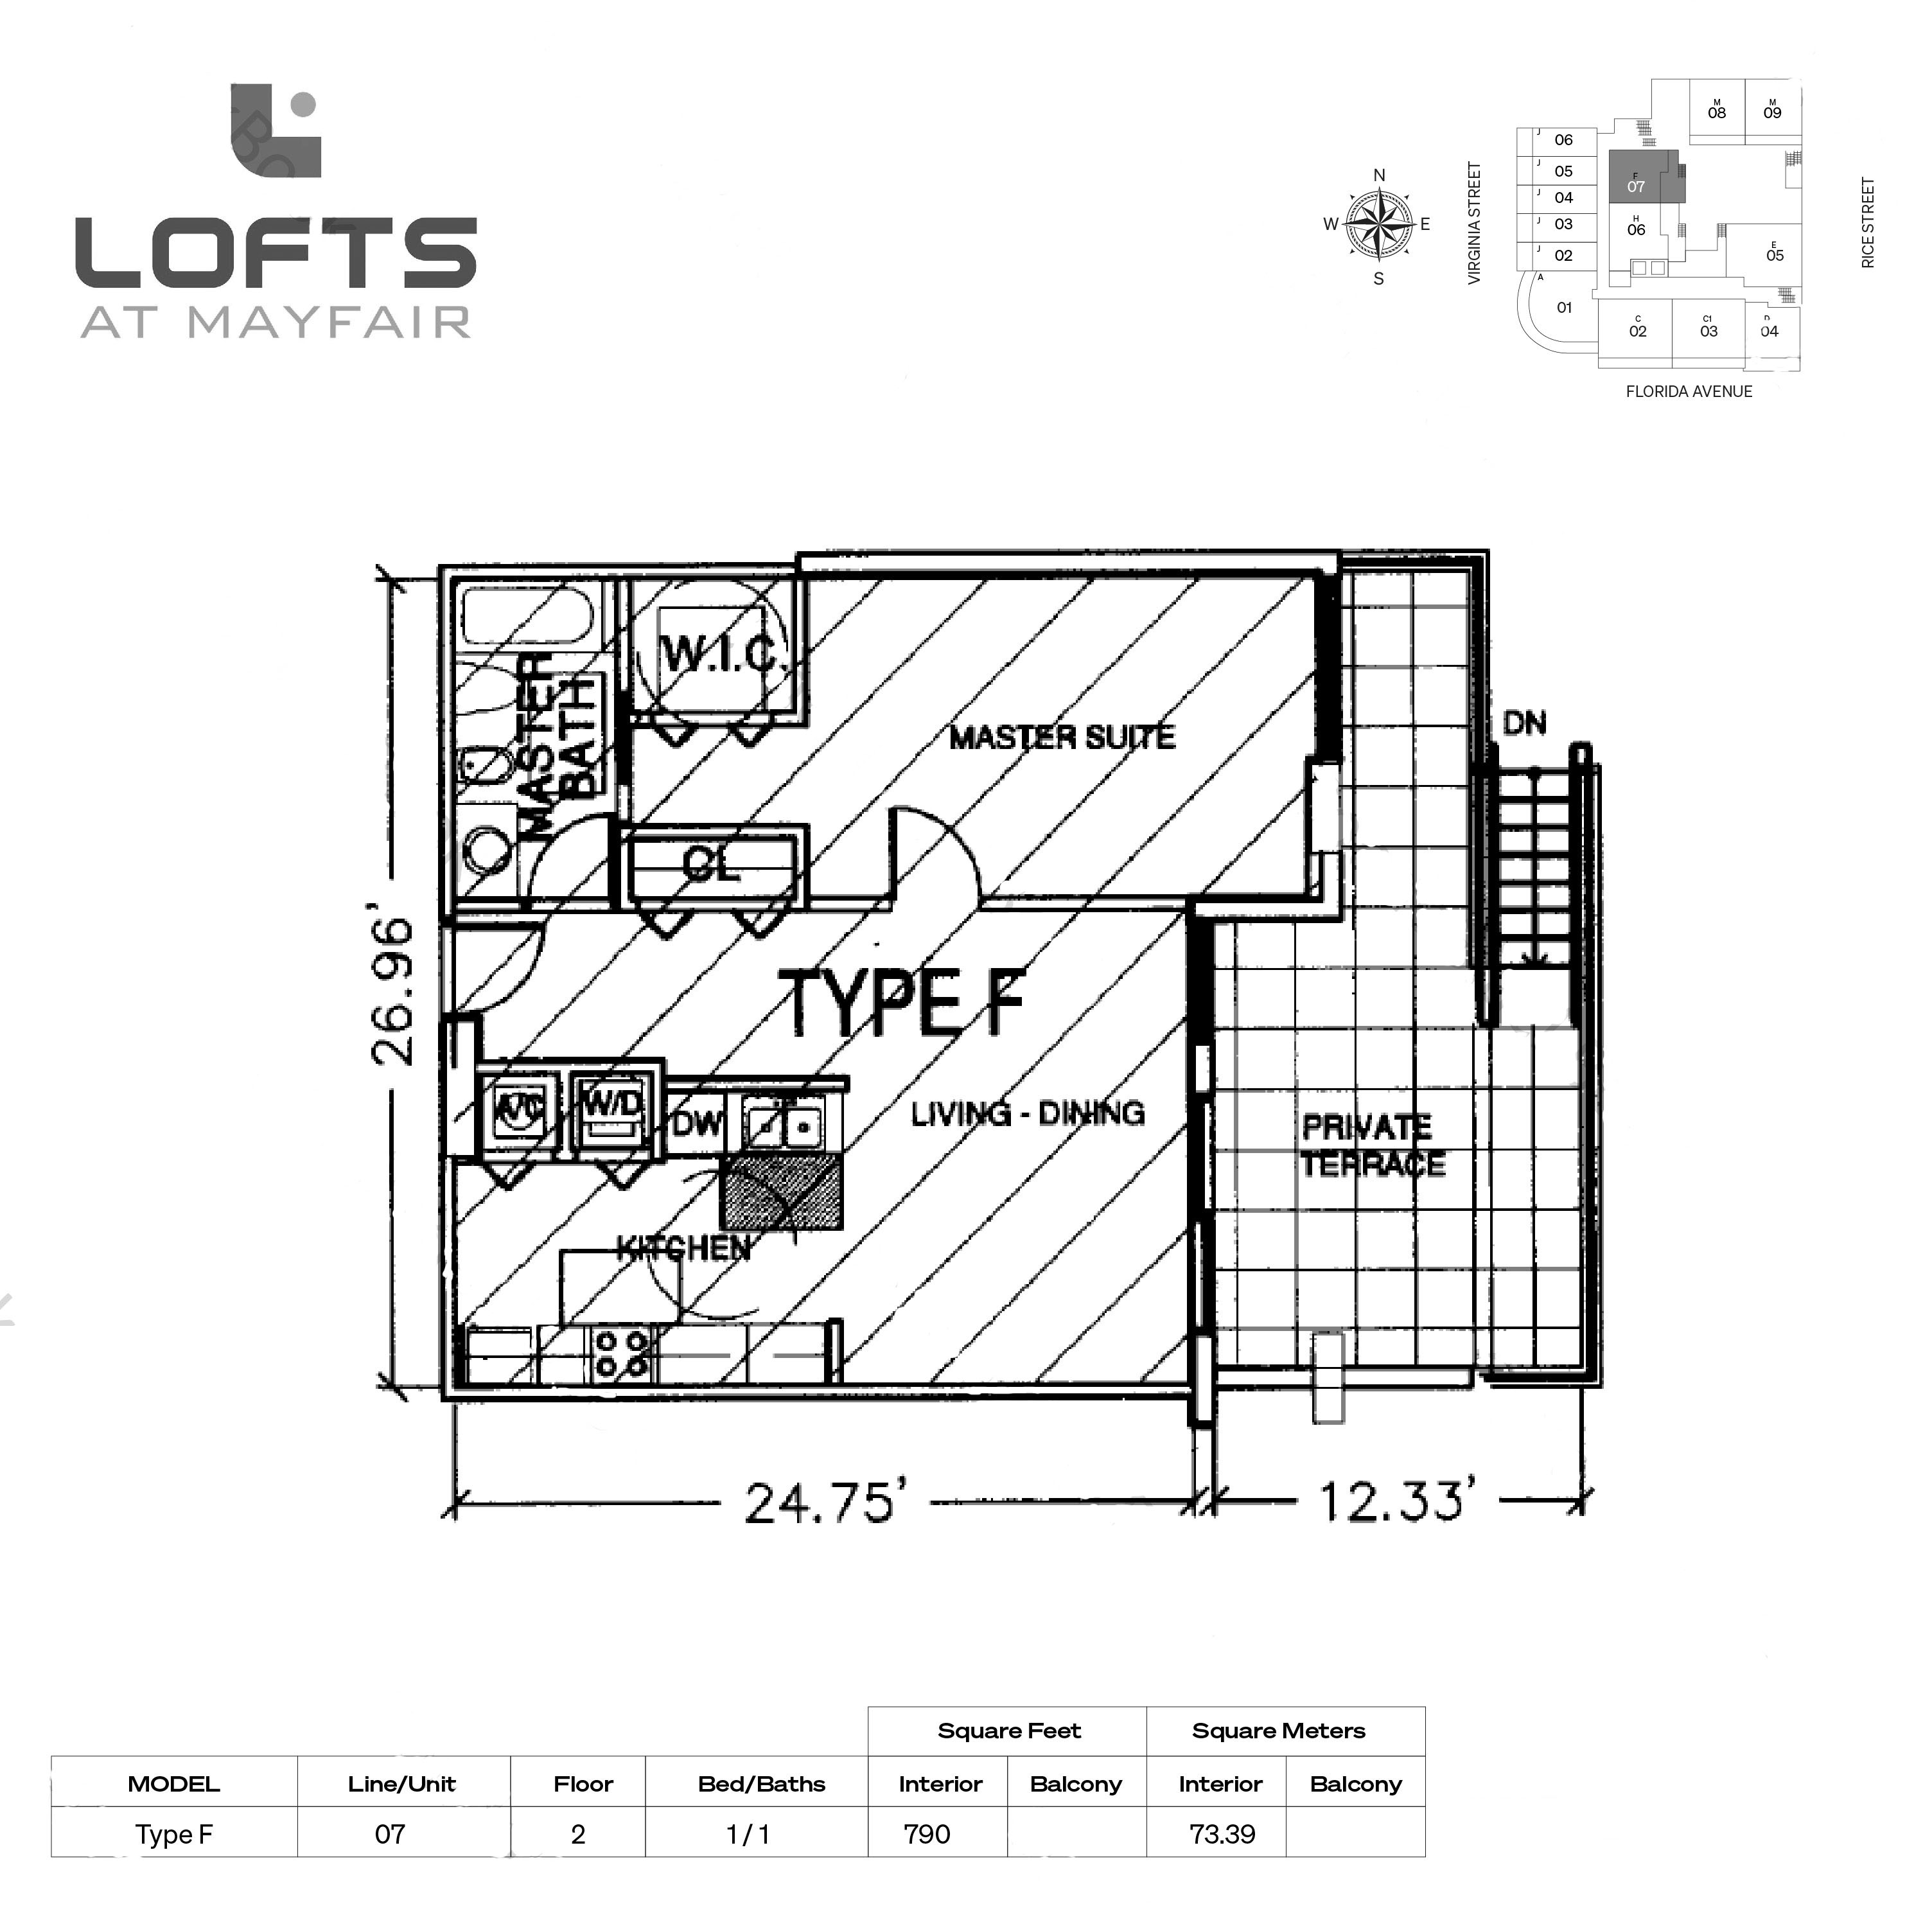 Lofts at Mayfair Type F